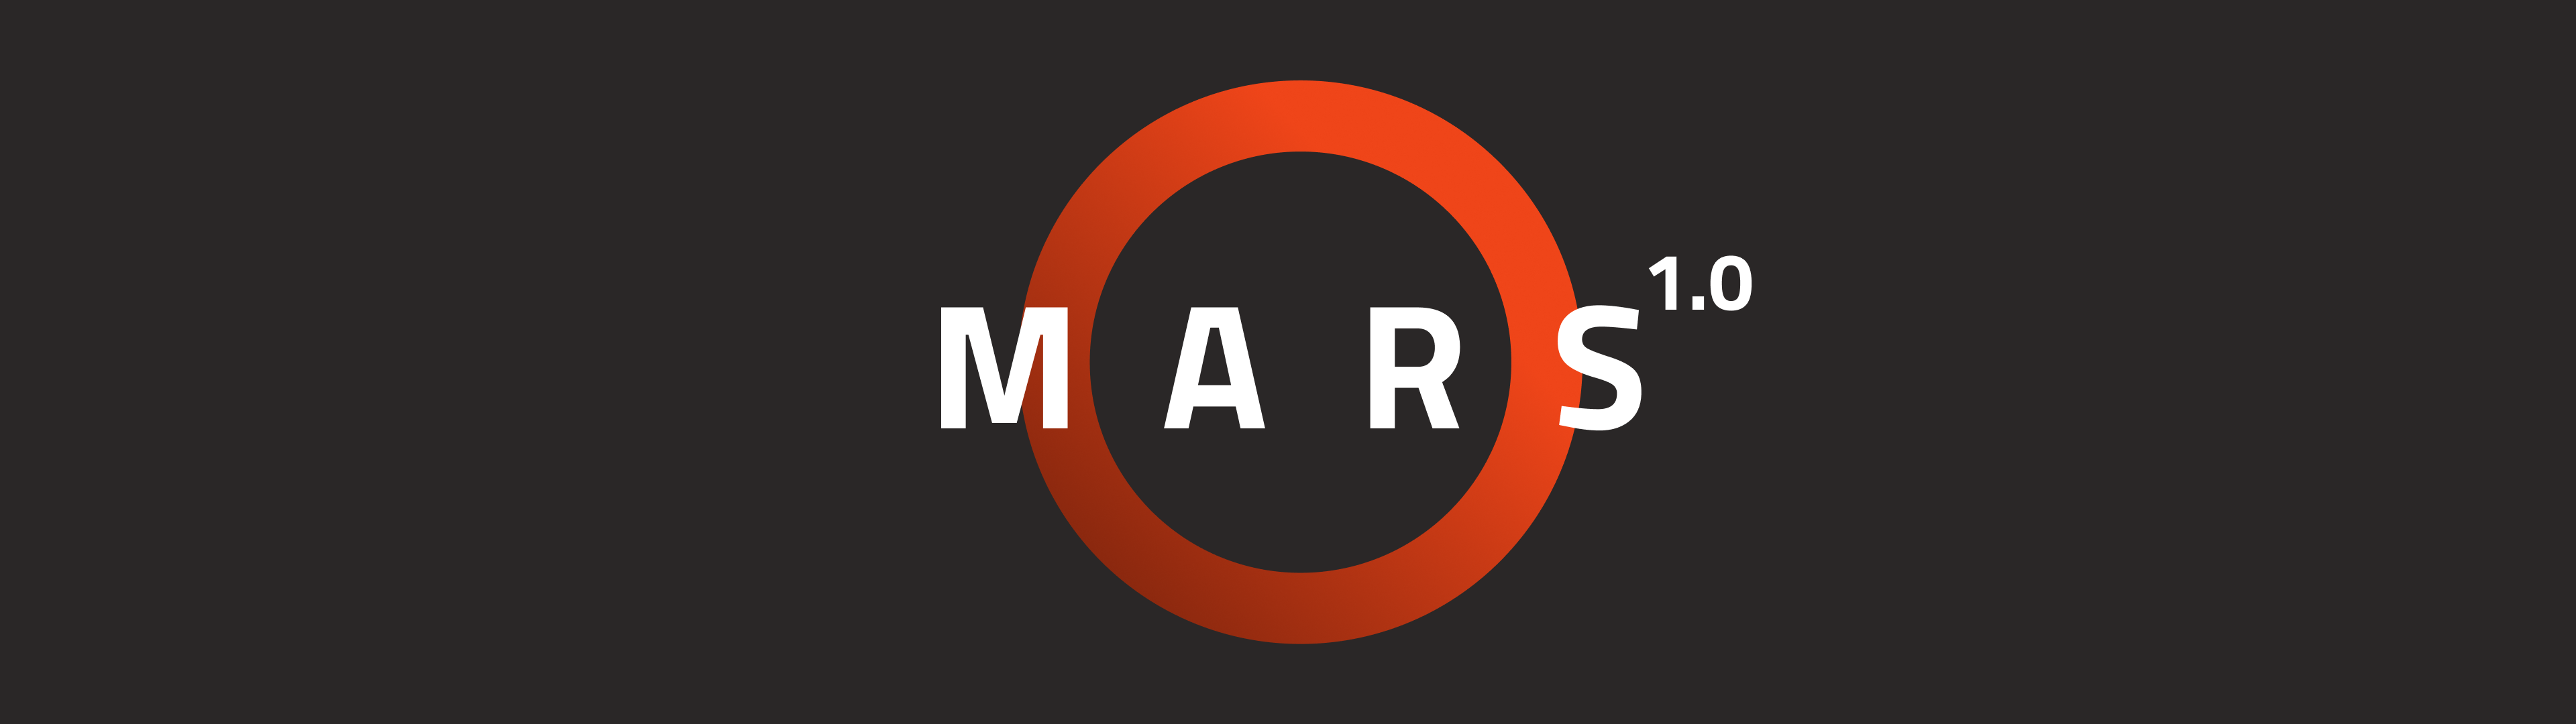 Curiosity MARS model logo